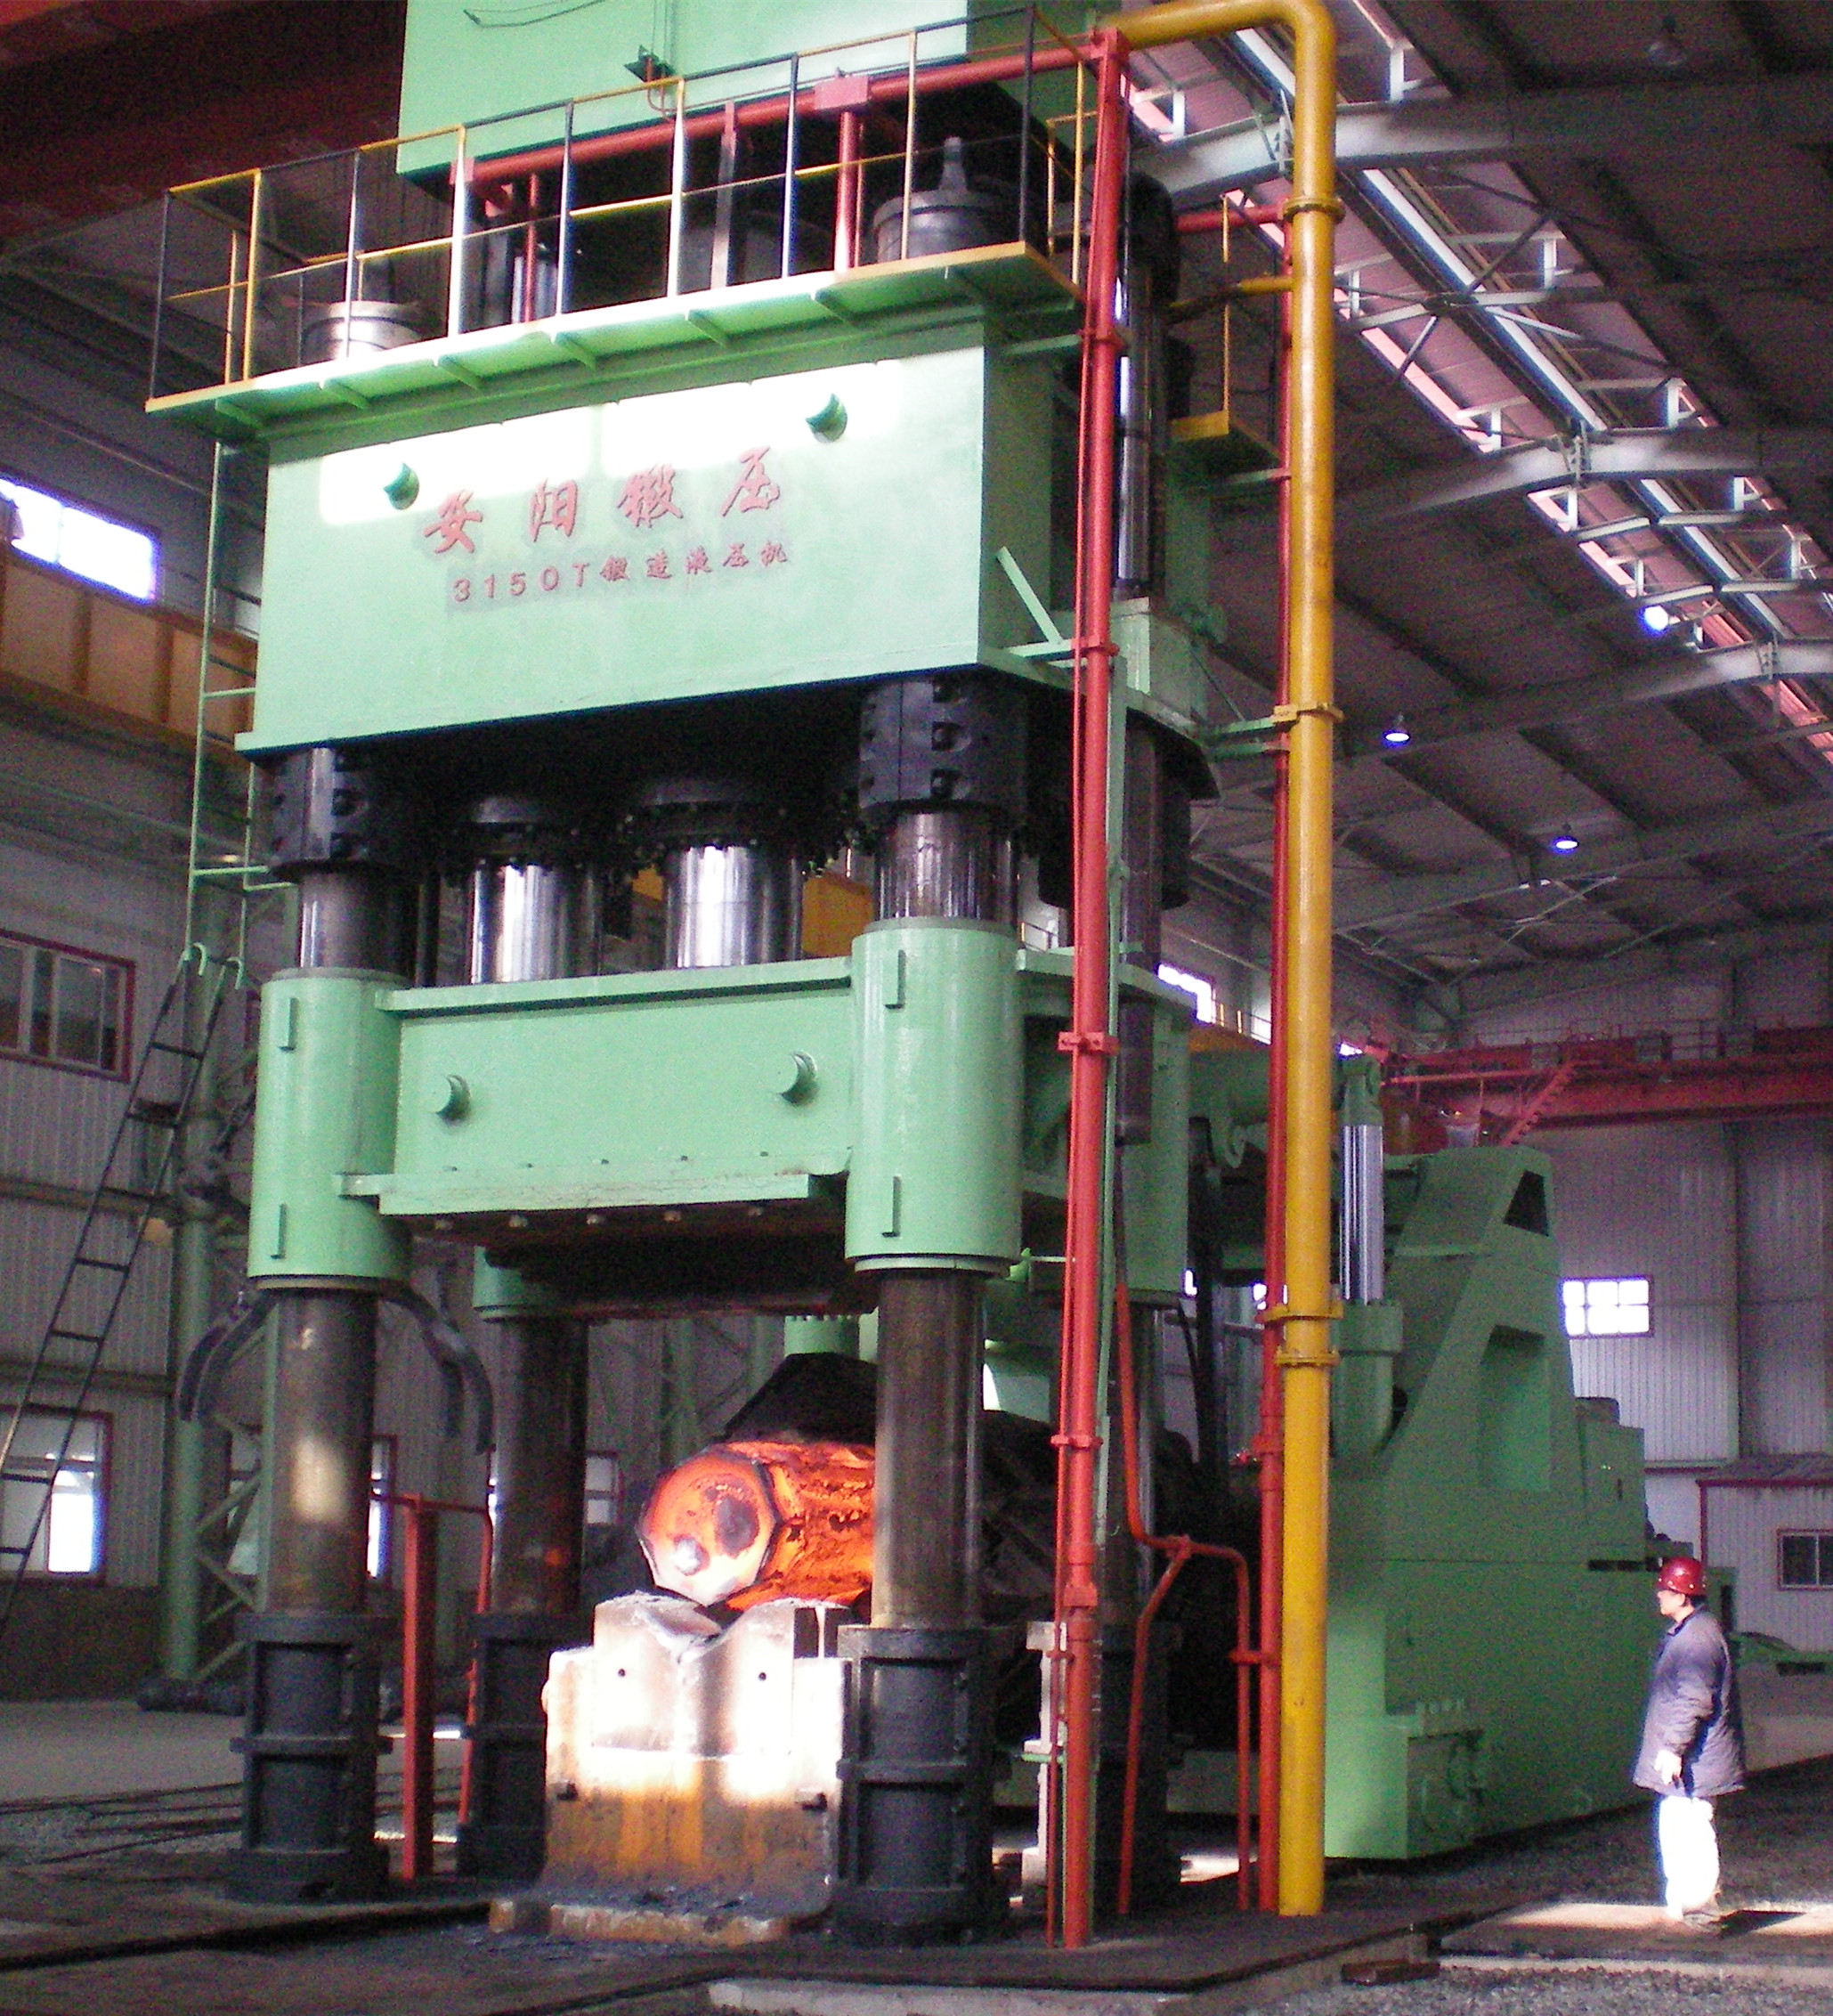 Hydraulic Open Die Forging Press